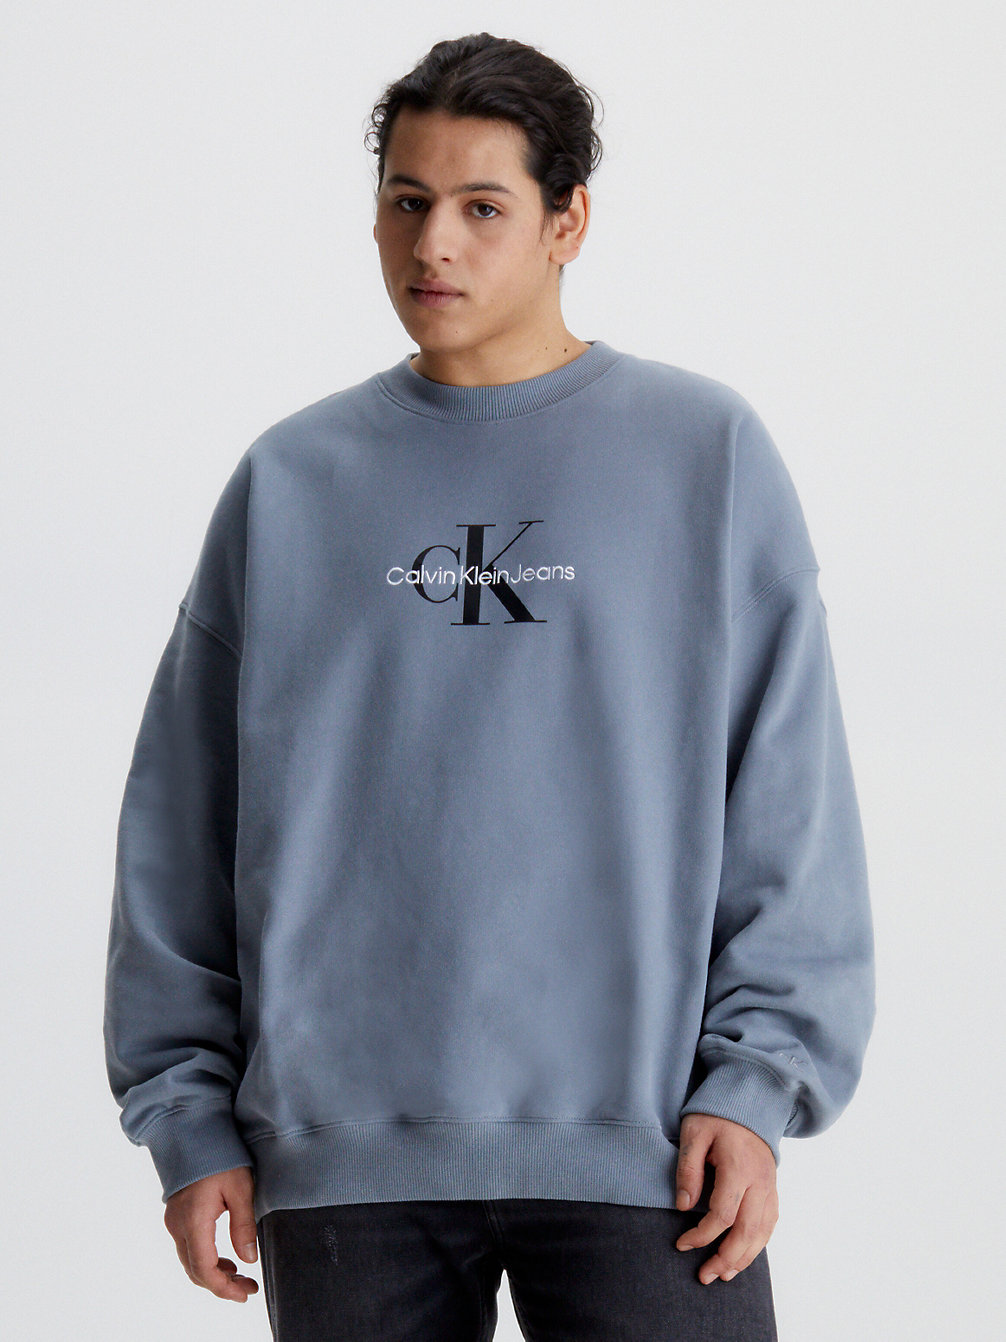 OVERCAST GREY Sweat-Shirt Grande Taille Avec Monogramme undefined hommes Calvin Klein